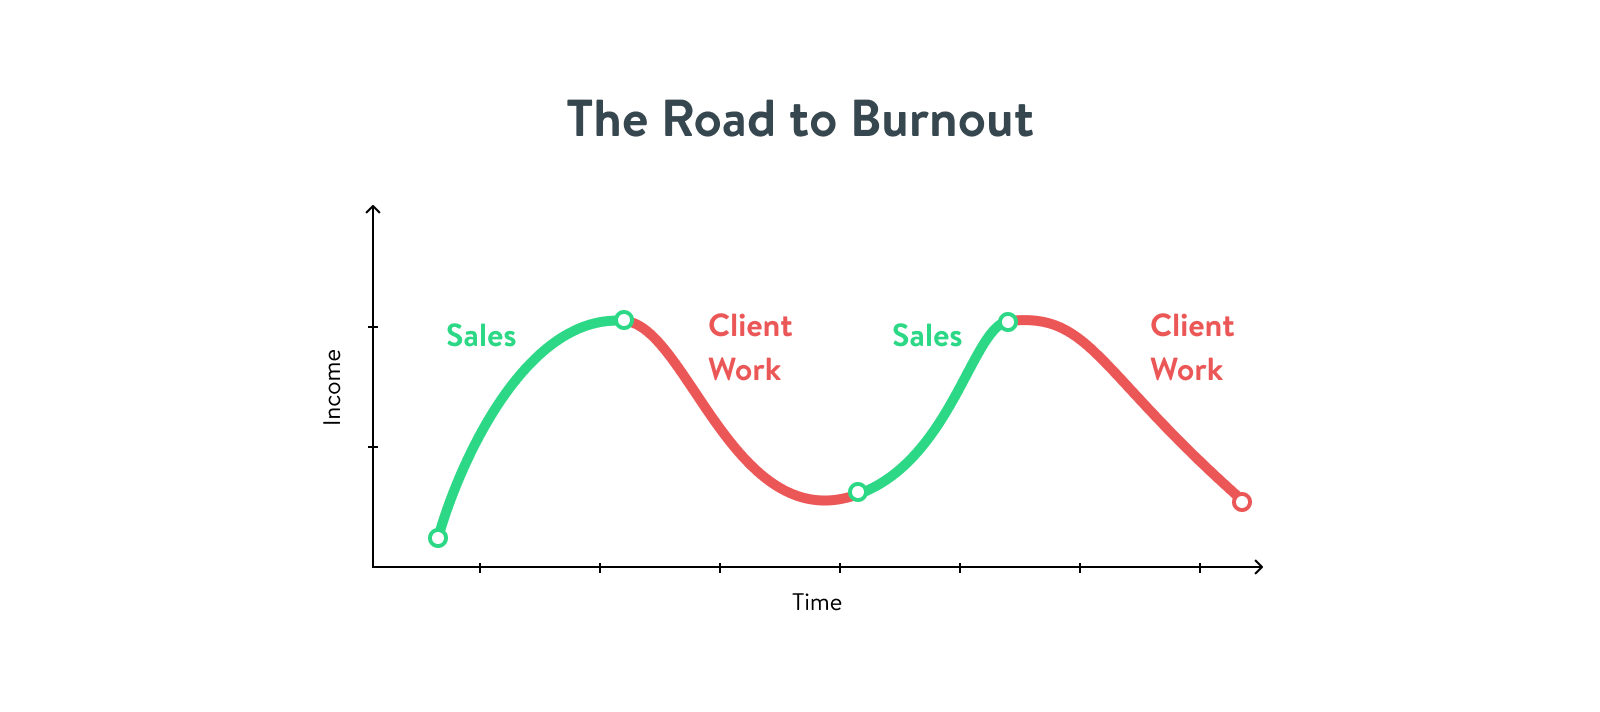 The Road to Burnout: Sales > Client Work > Sales > Client Work